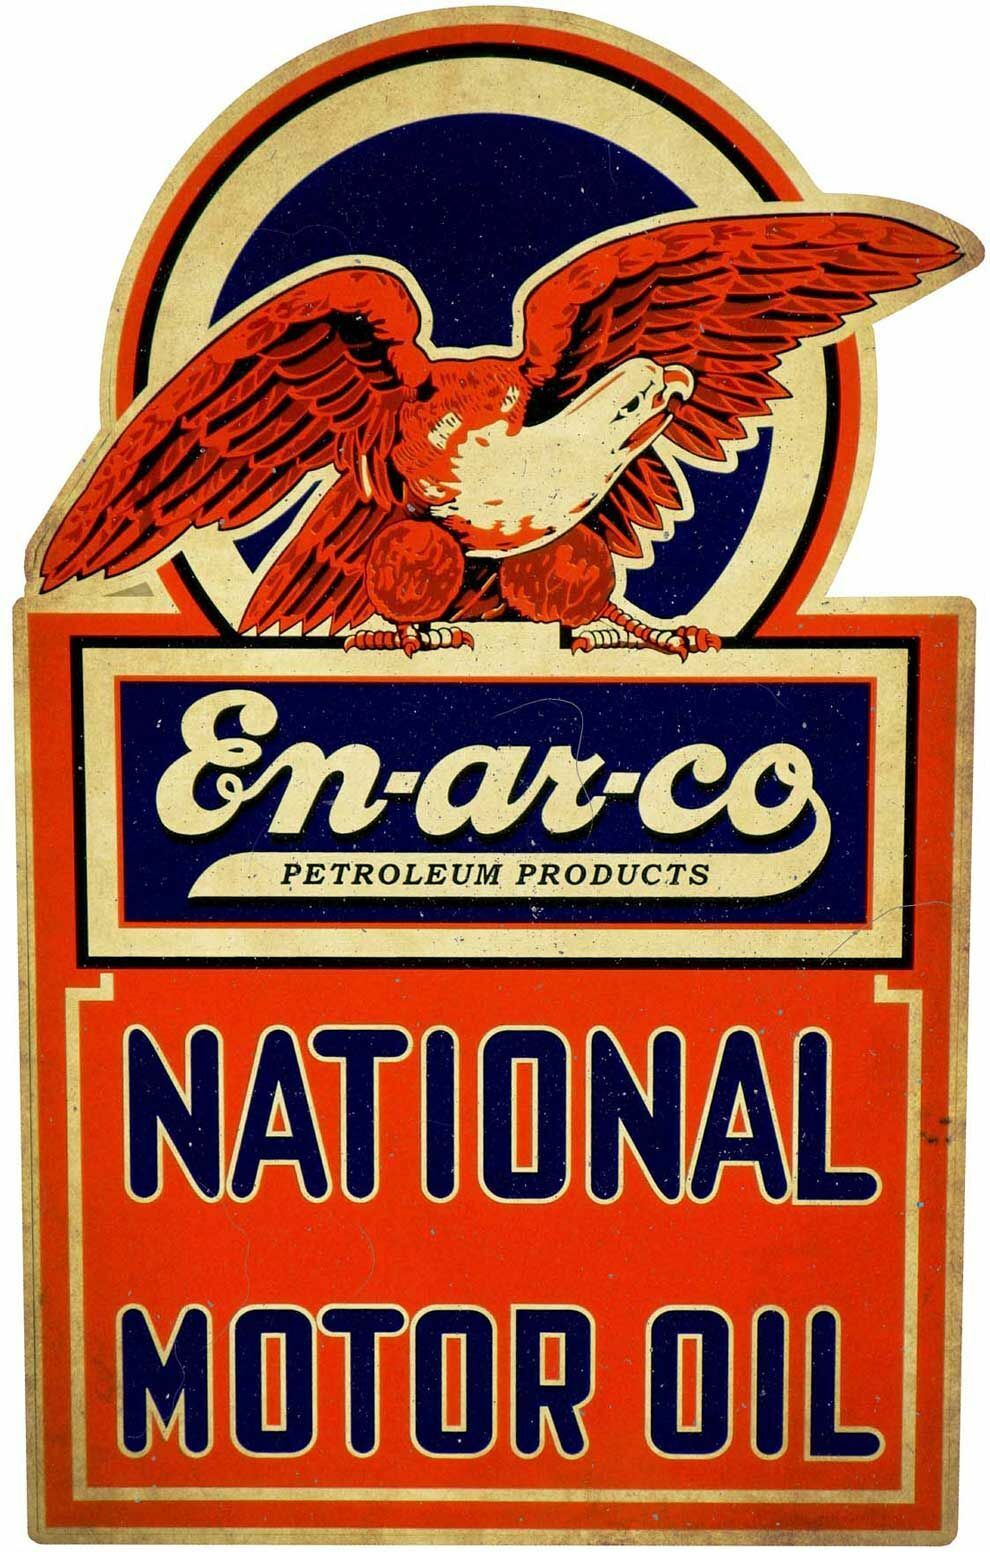 ENARCO NATIONAL MOTOR OIL EAGLE LOGO HEAVY DUTY USA MADE METAL ADVERTISING SIGN